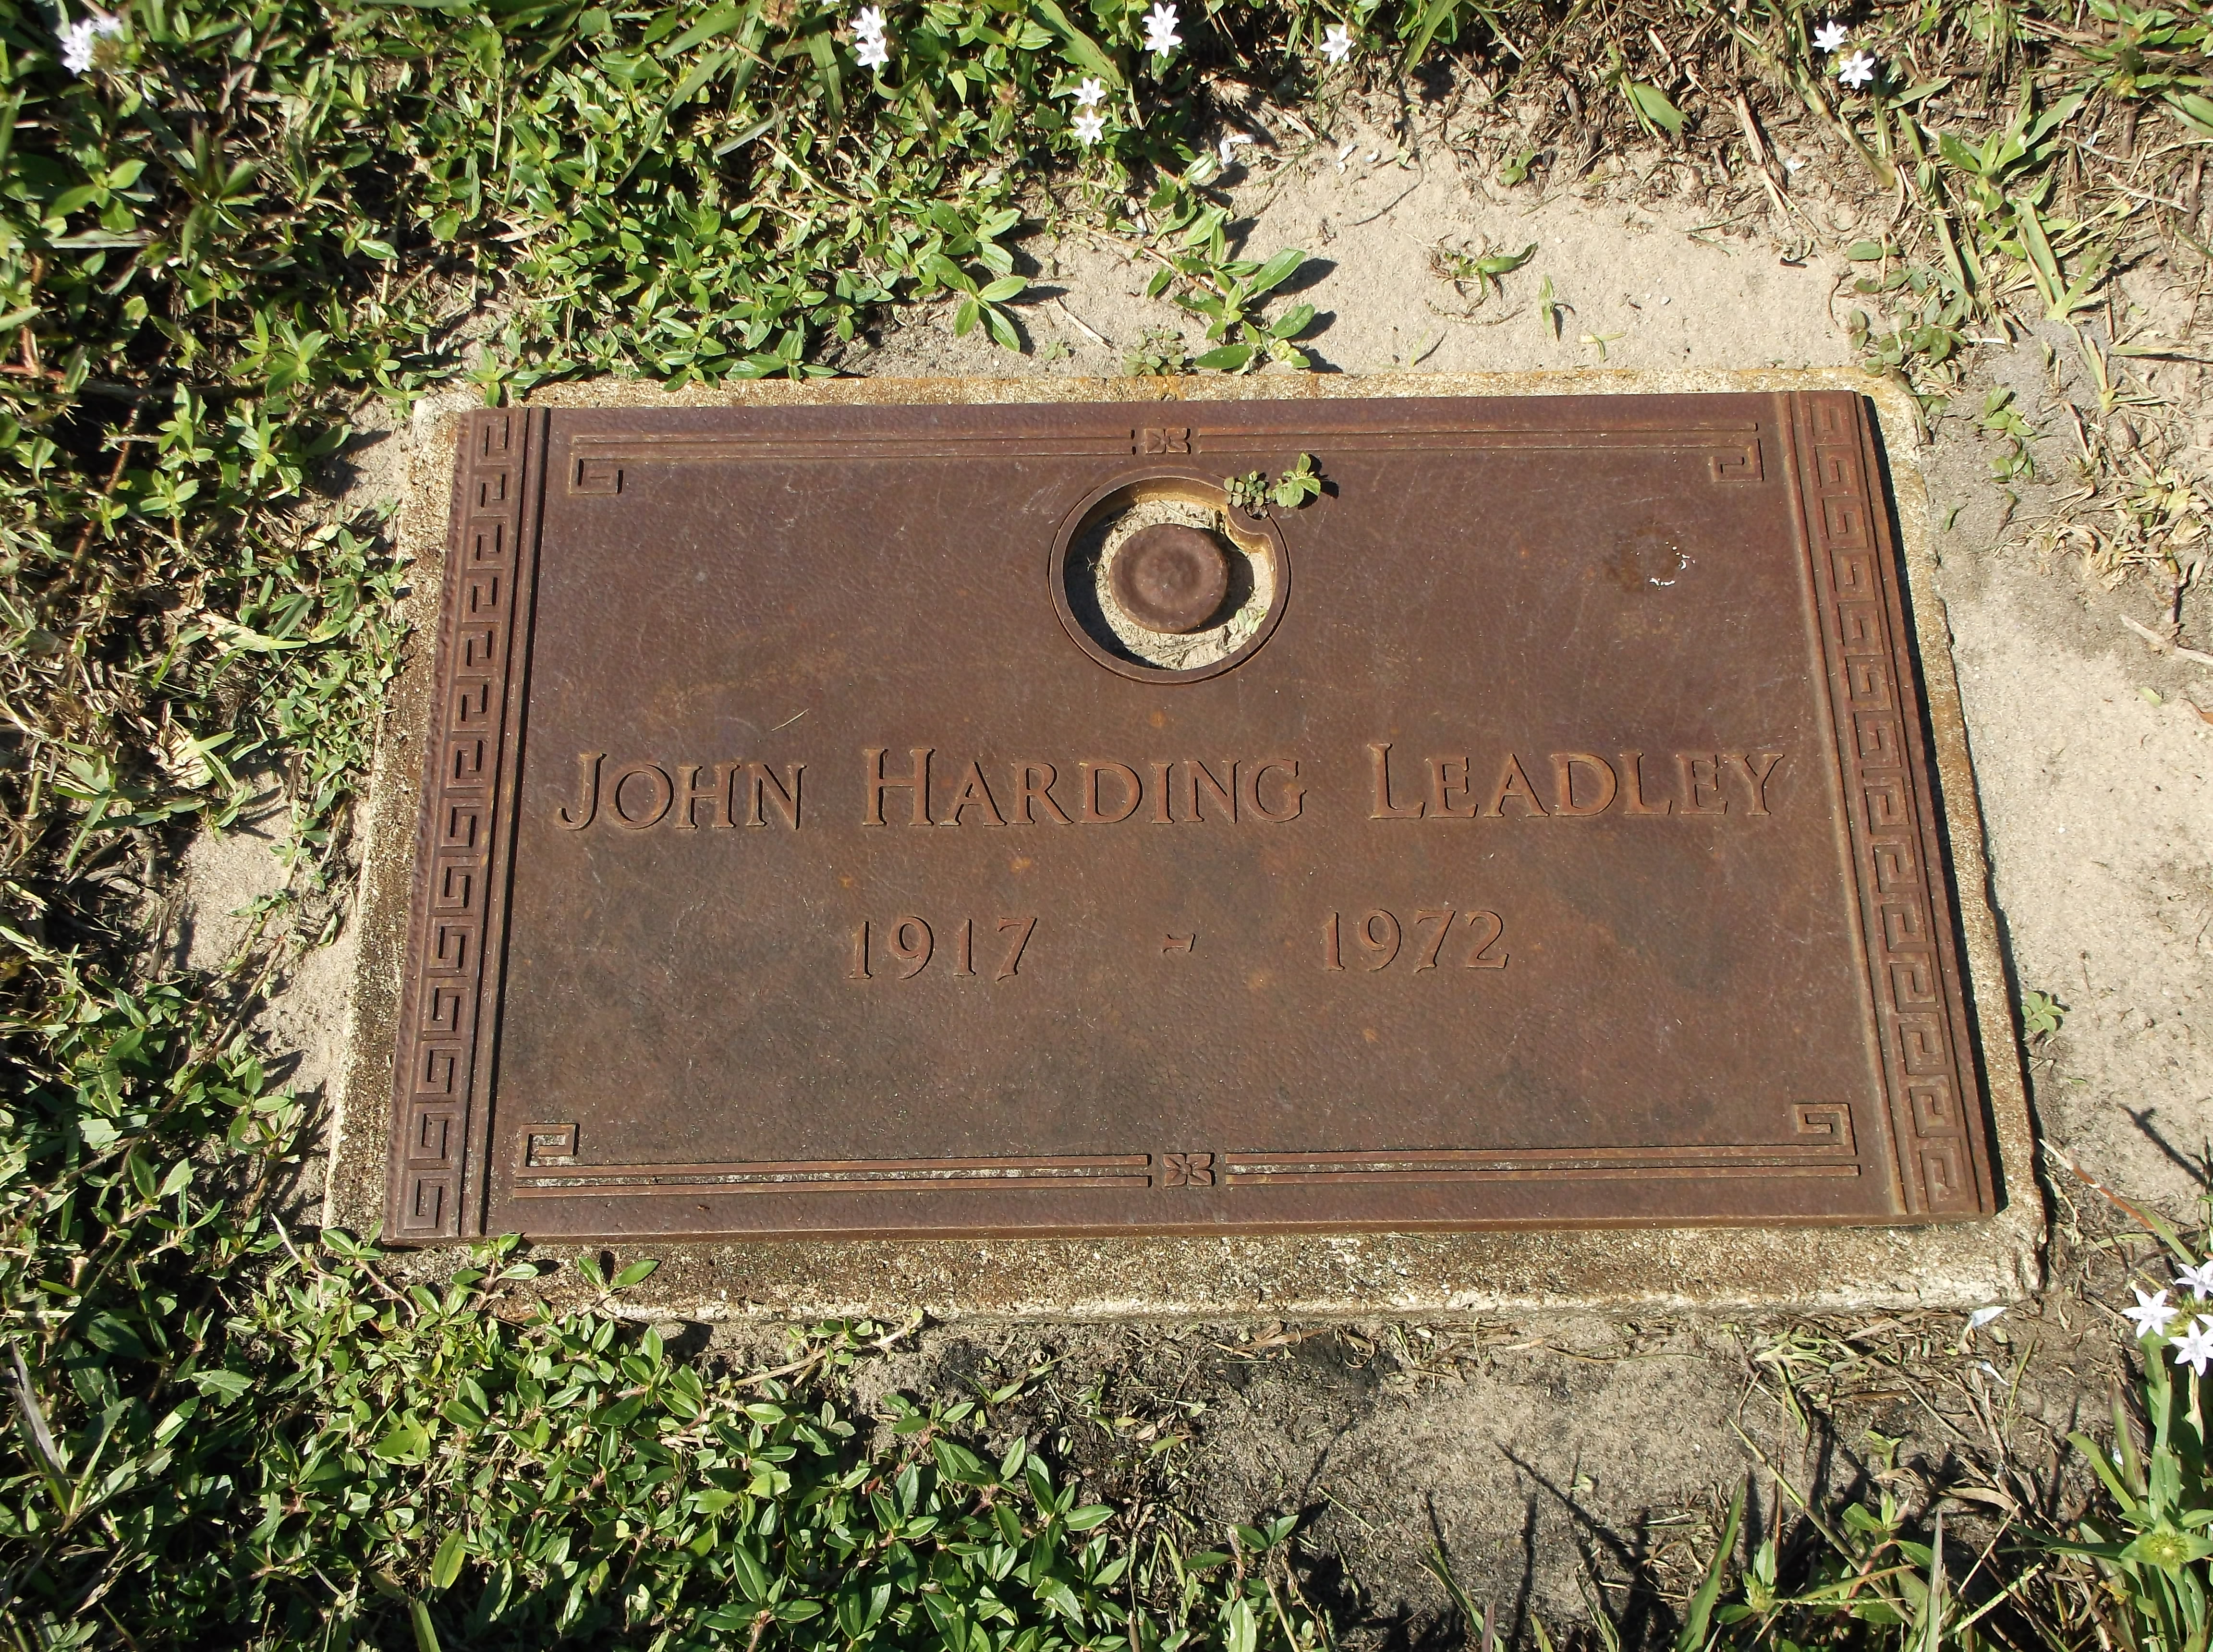 John Harding Leadley